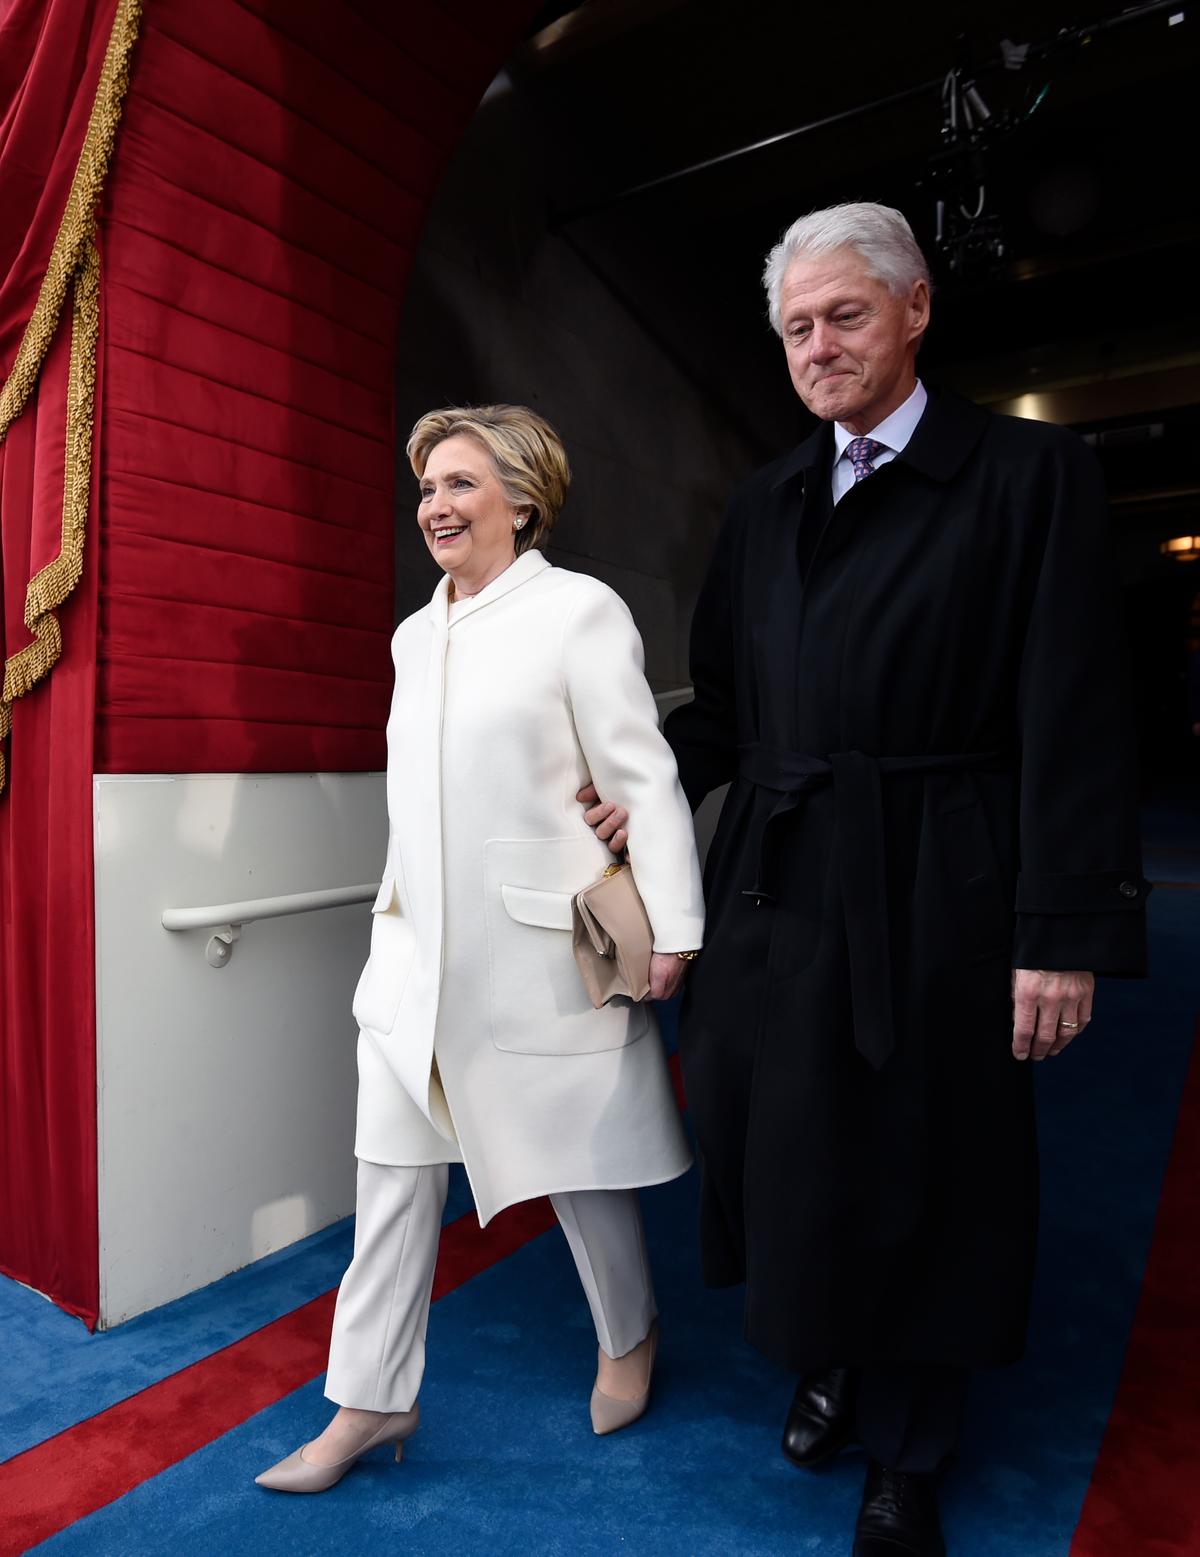 Former President Bill Clinton and his wife Hillary Clinton arrive on Capitol Hill in Washington on Jan. 20, 2017. (Saul Loeb via AP, Pool)